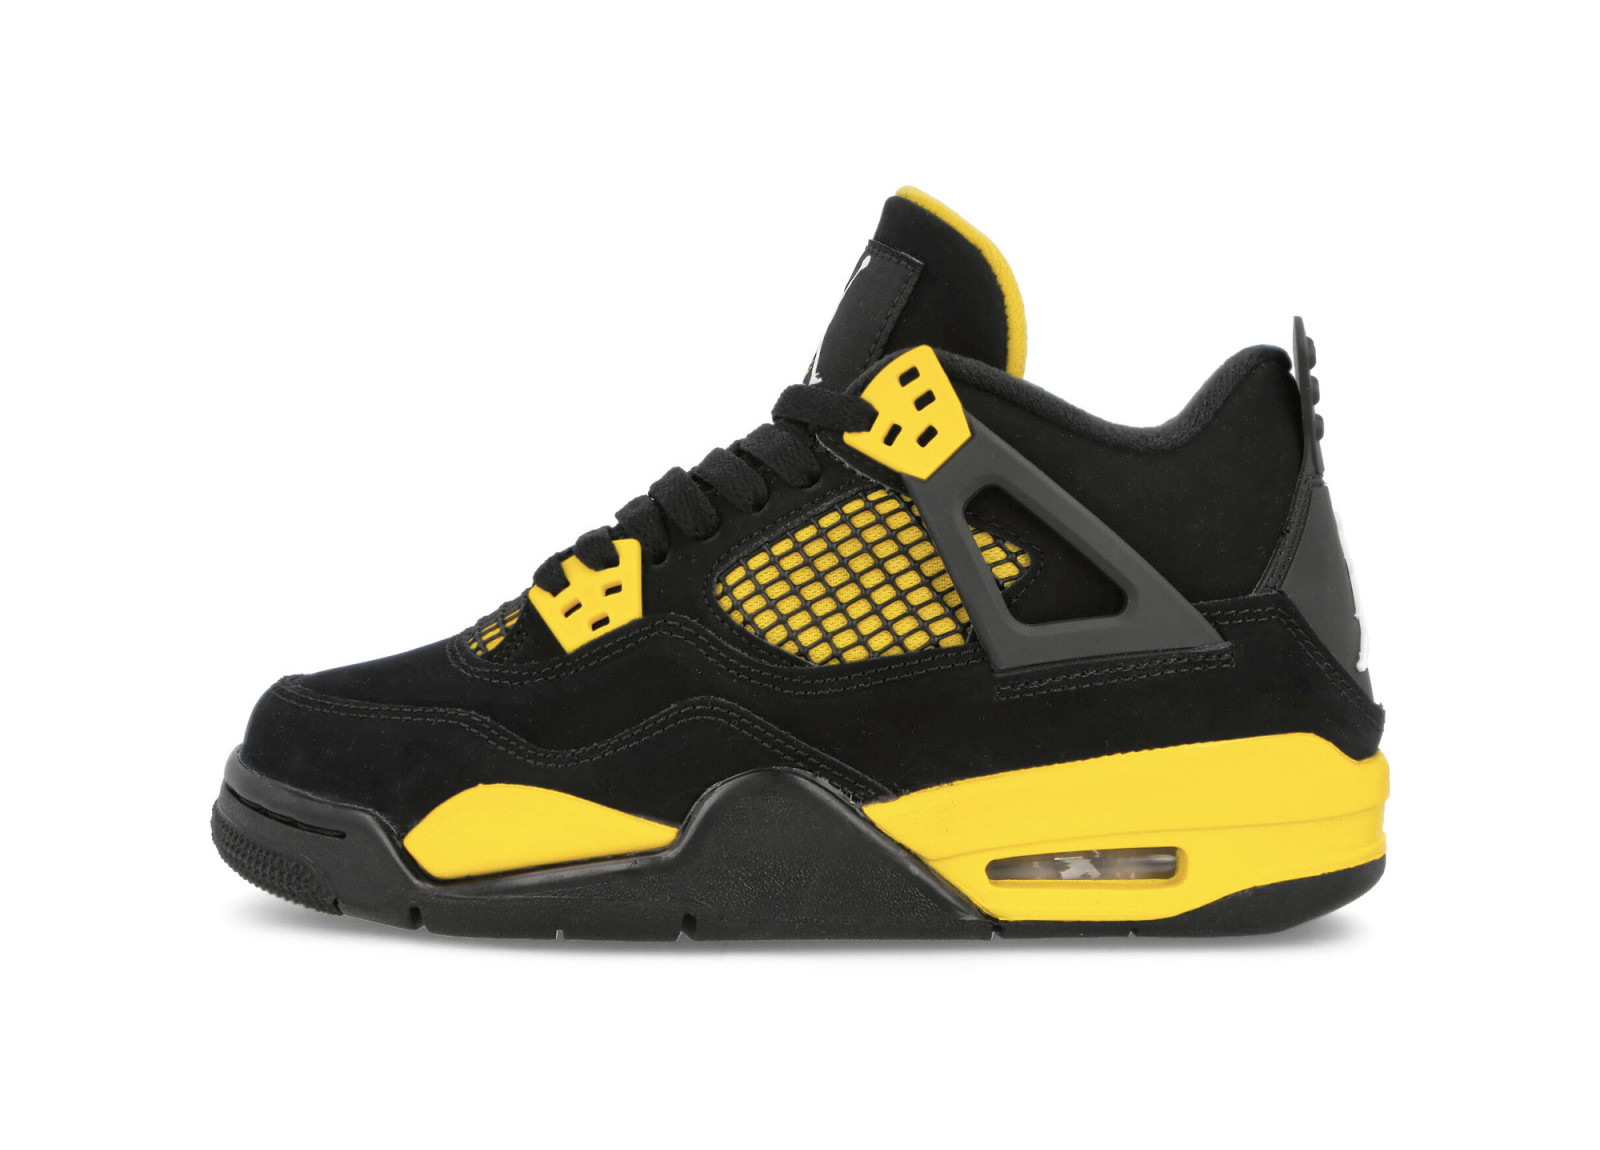 Air Jordan 4 Retro (GS)
« Tour Yellow »